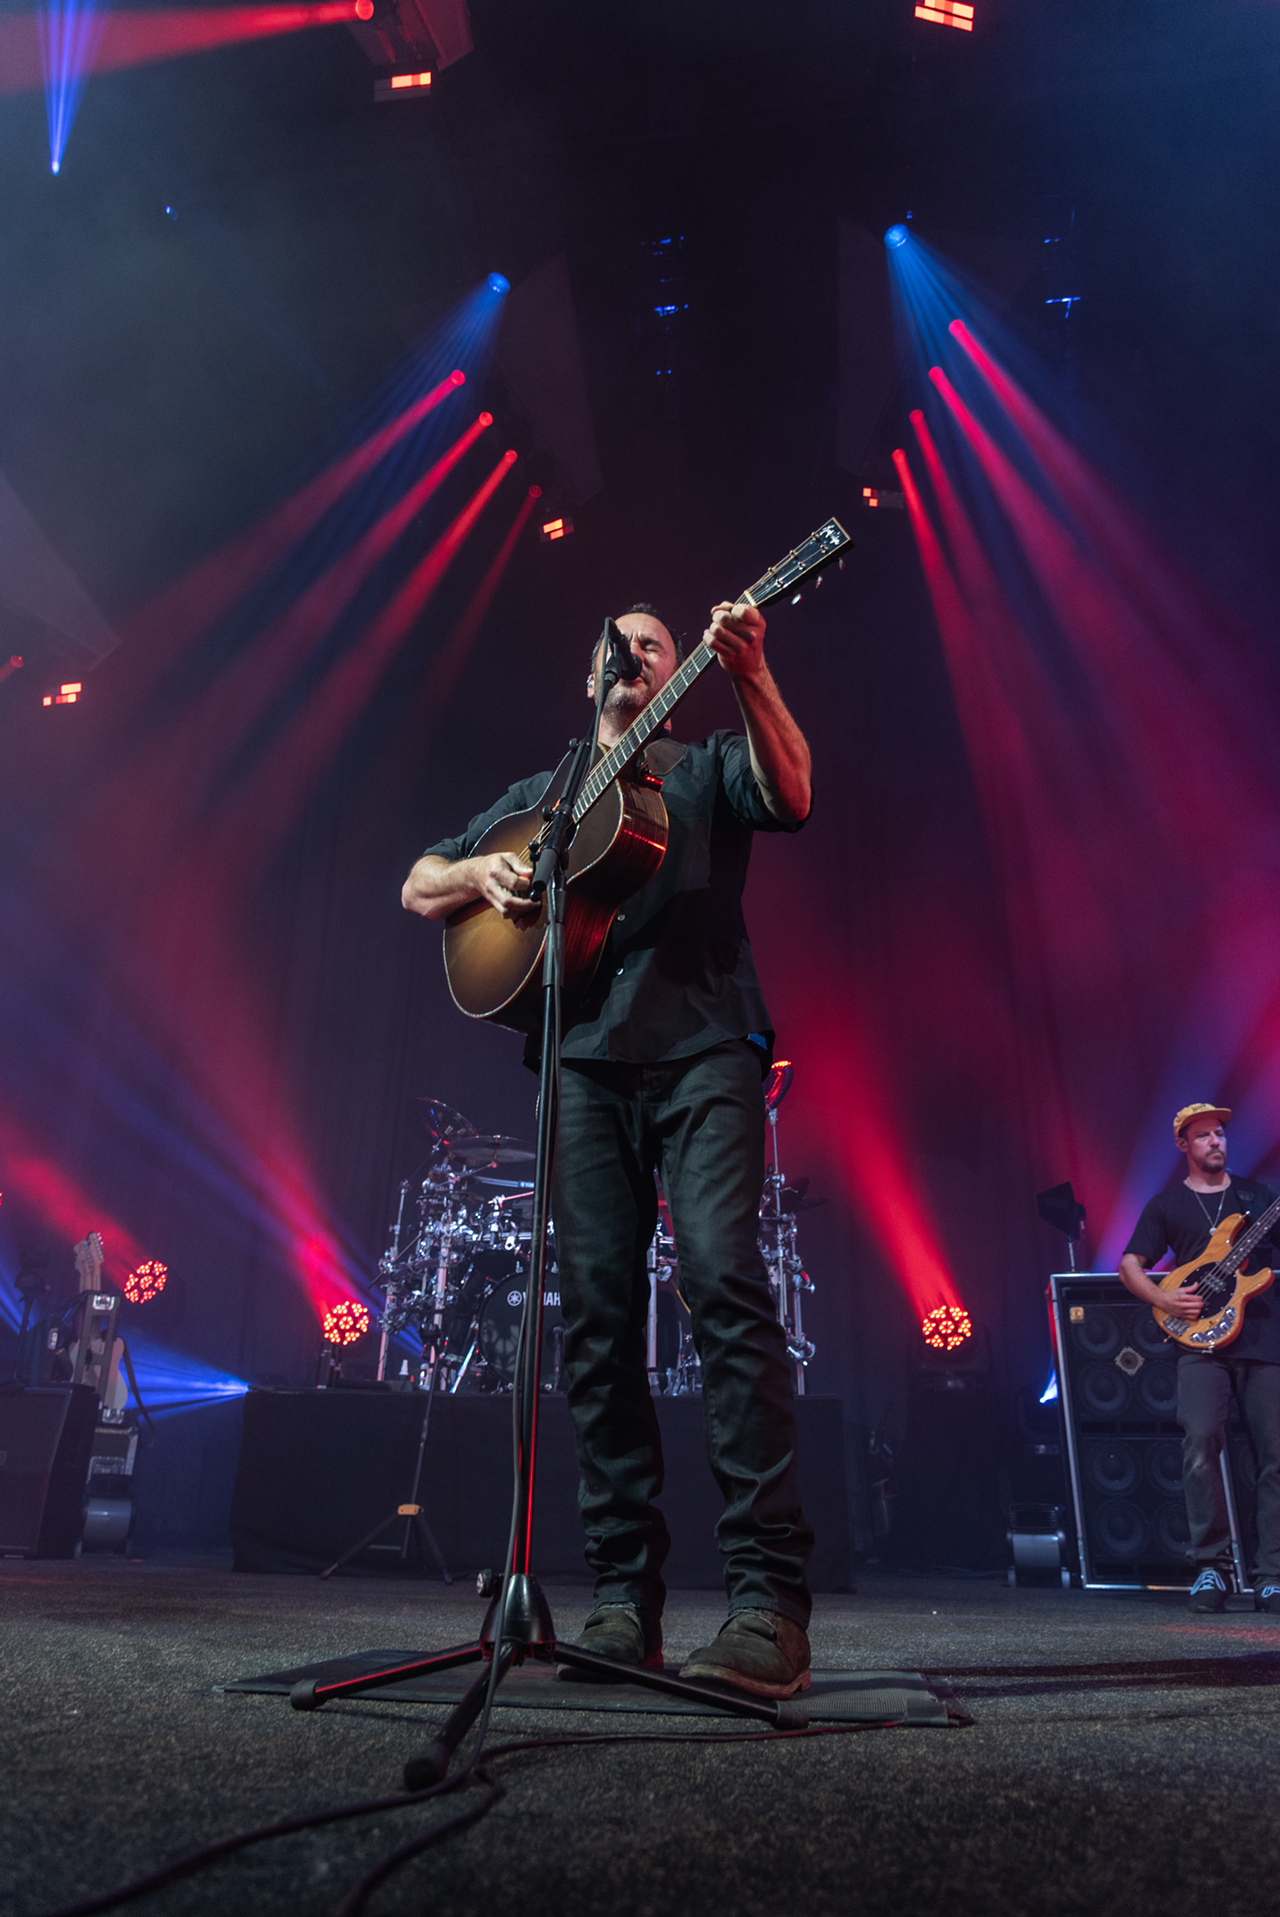 PHOTOS: Dave Matthews Band at Riverbend Music Center